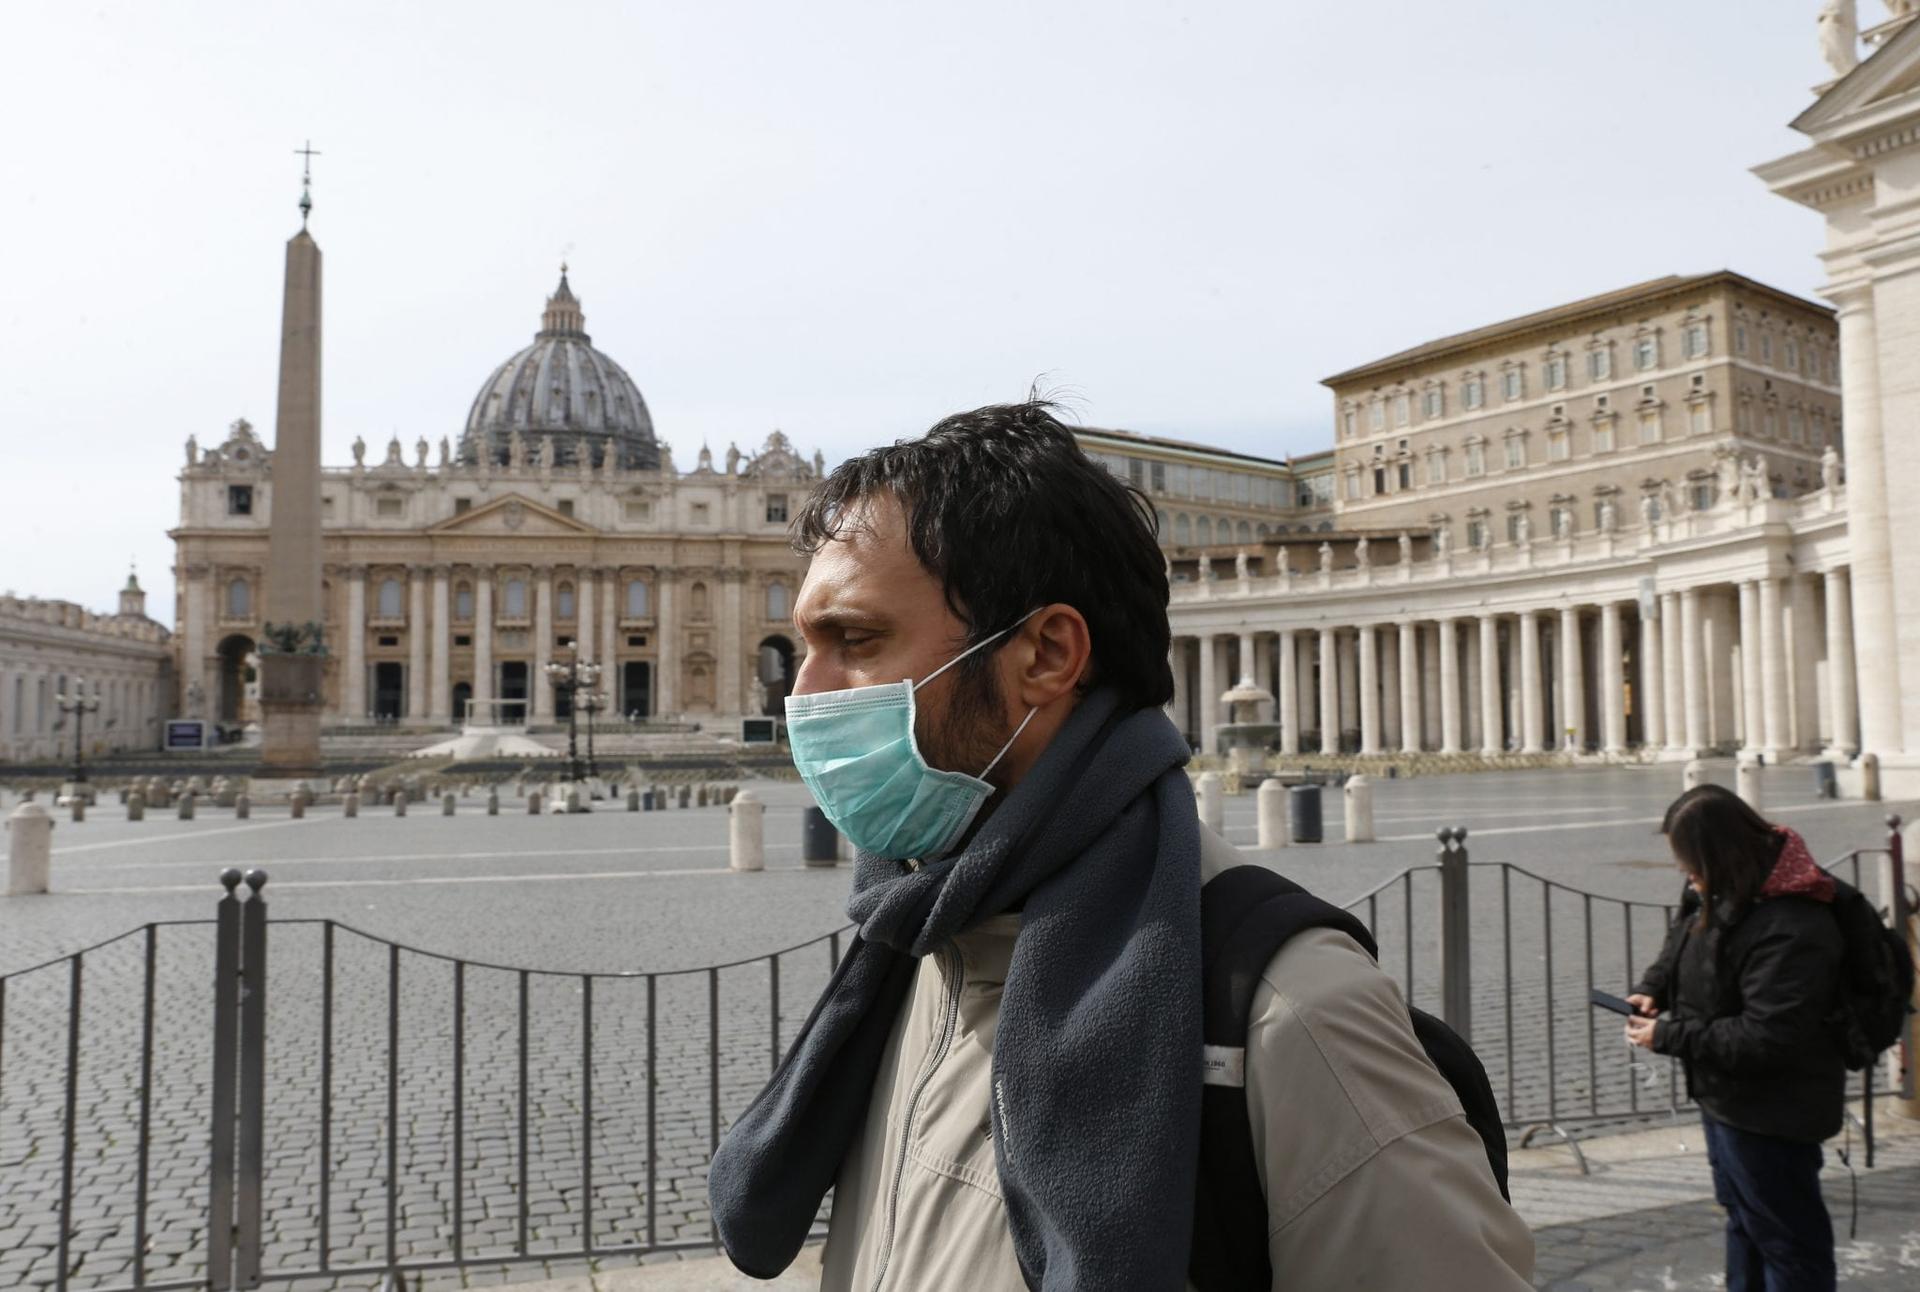 Vatican closes St. Peter’s Square, Basilica to tourists through April 3